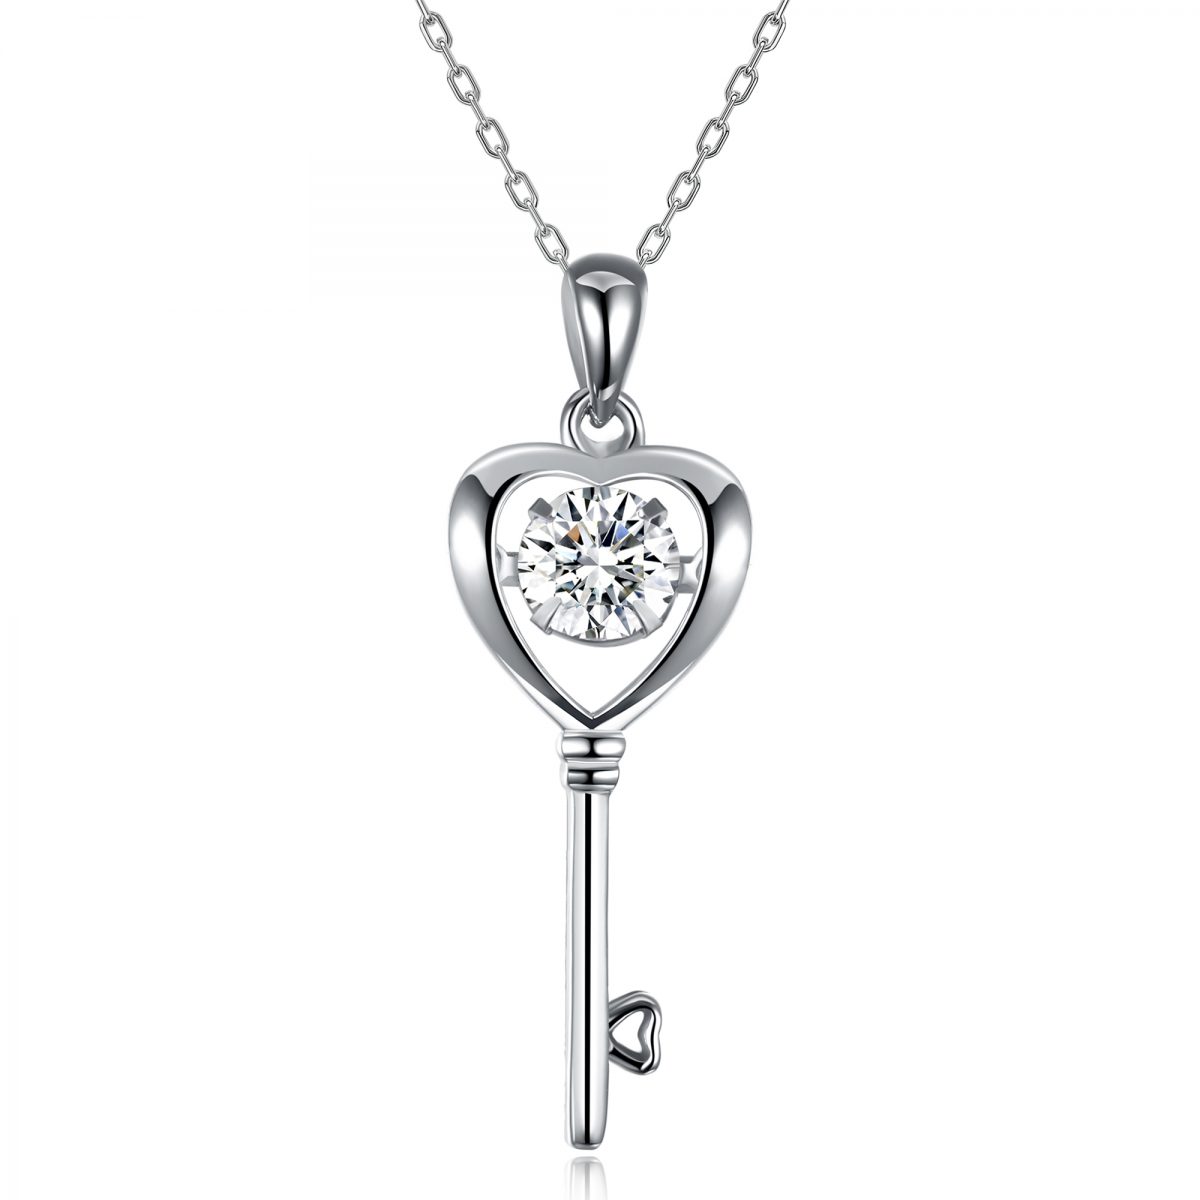 Elan Heart Key Pendant - Silver